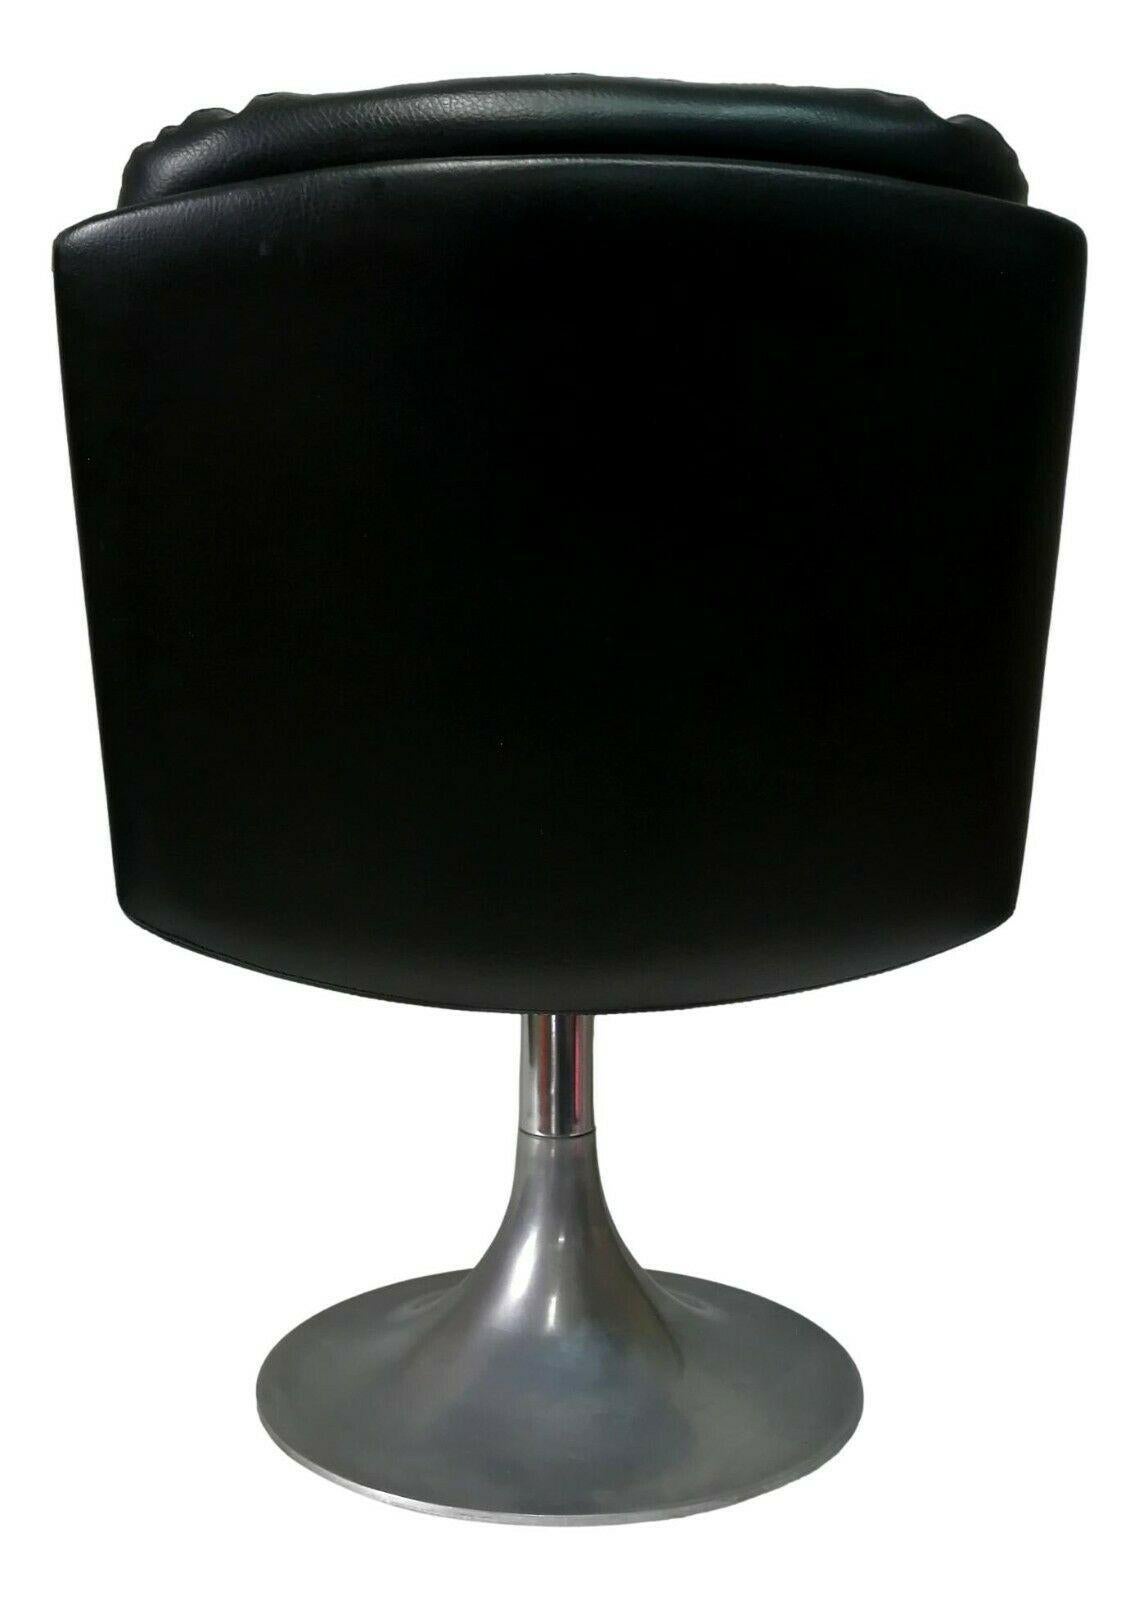 Late 20th Century Original design Tulip chair armchair, 1970s